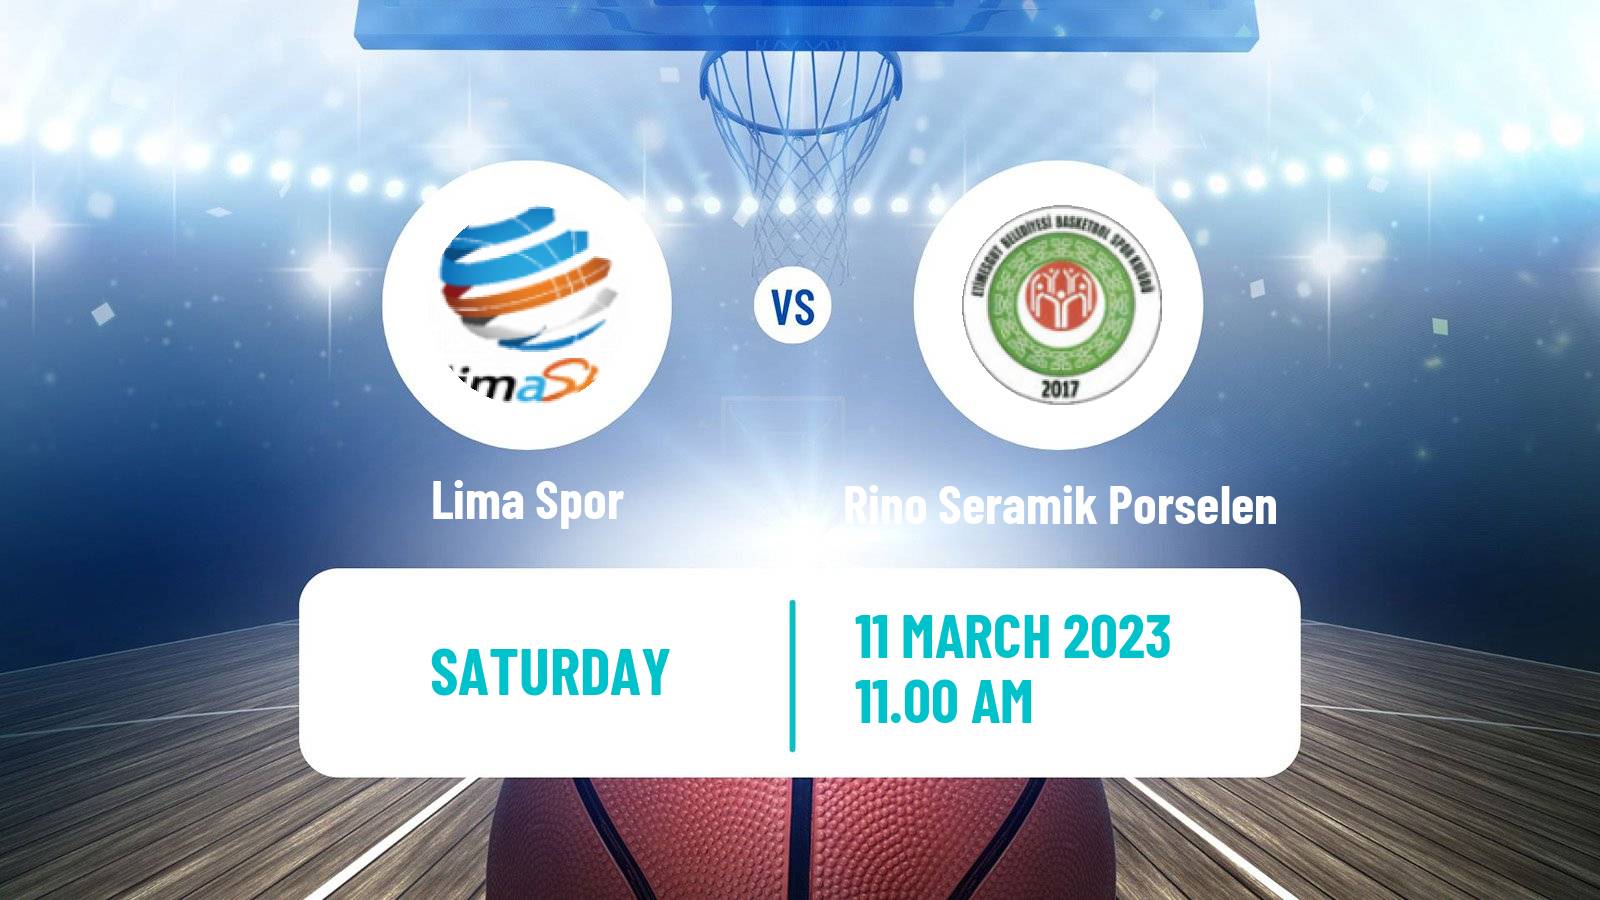 Basketball Turkish TB2L Lima Spor - Rino Seramik Porselen